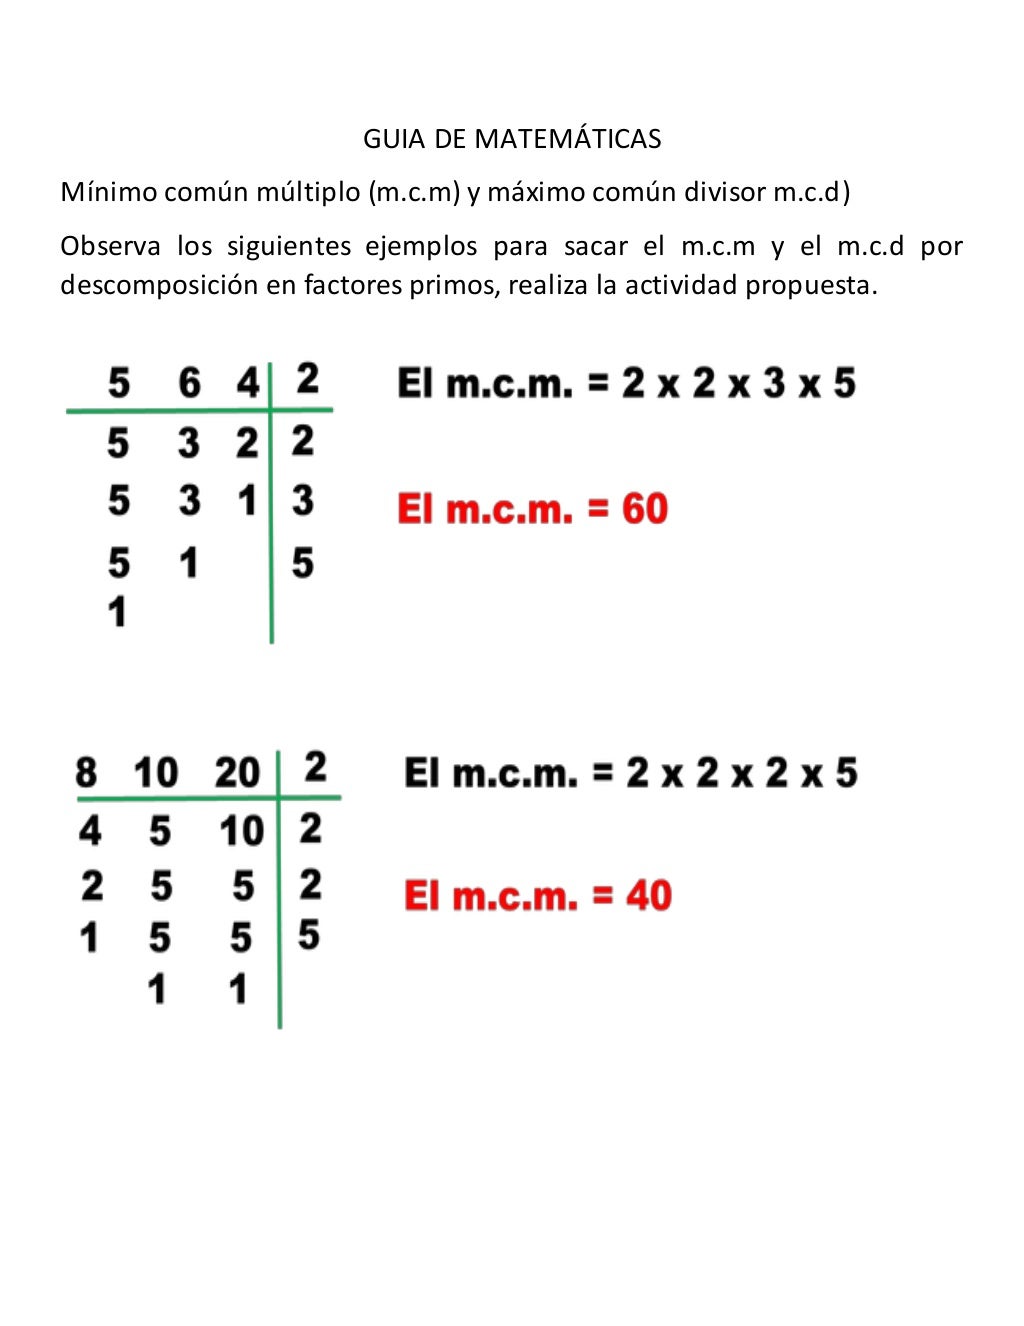 Matematicas mcm y mcd